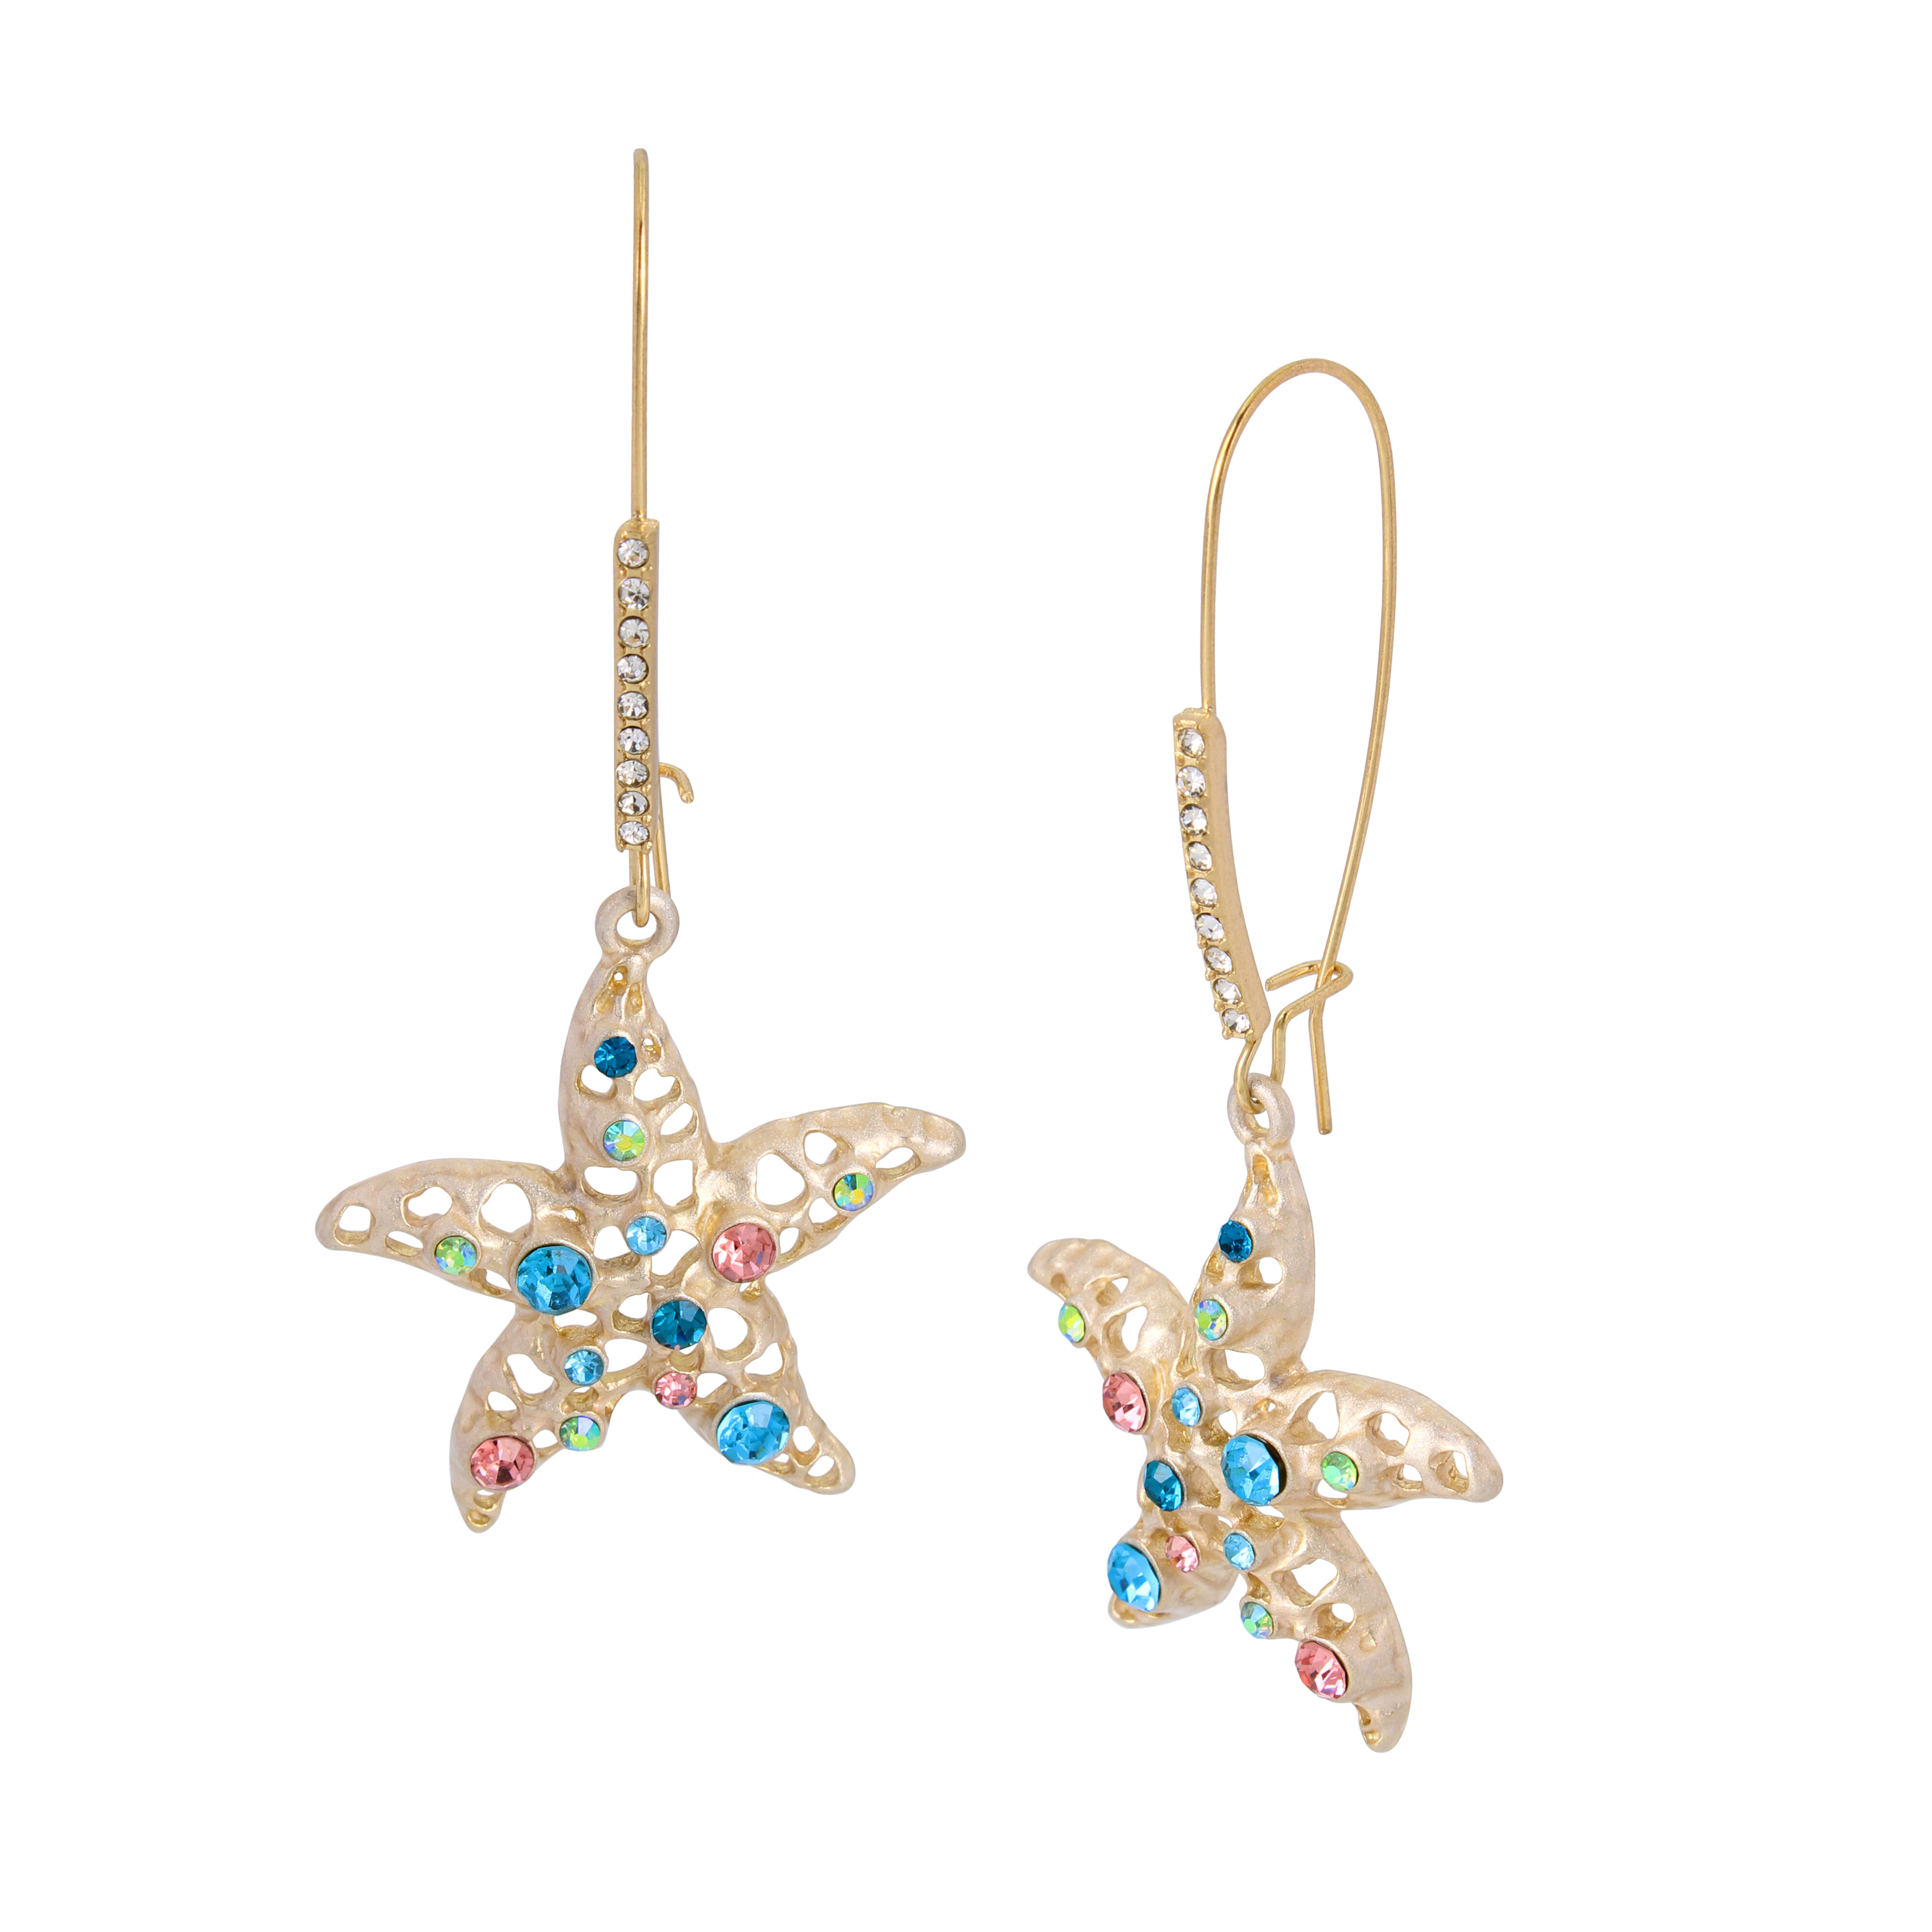 Bijuterii Femei Betsey Johnson Starfish Dangle Earrings Multi